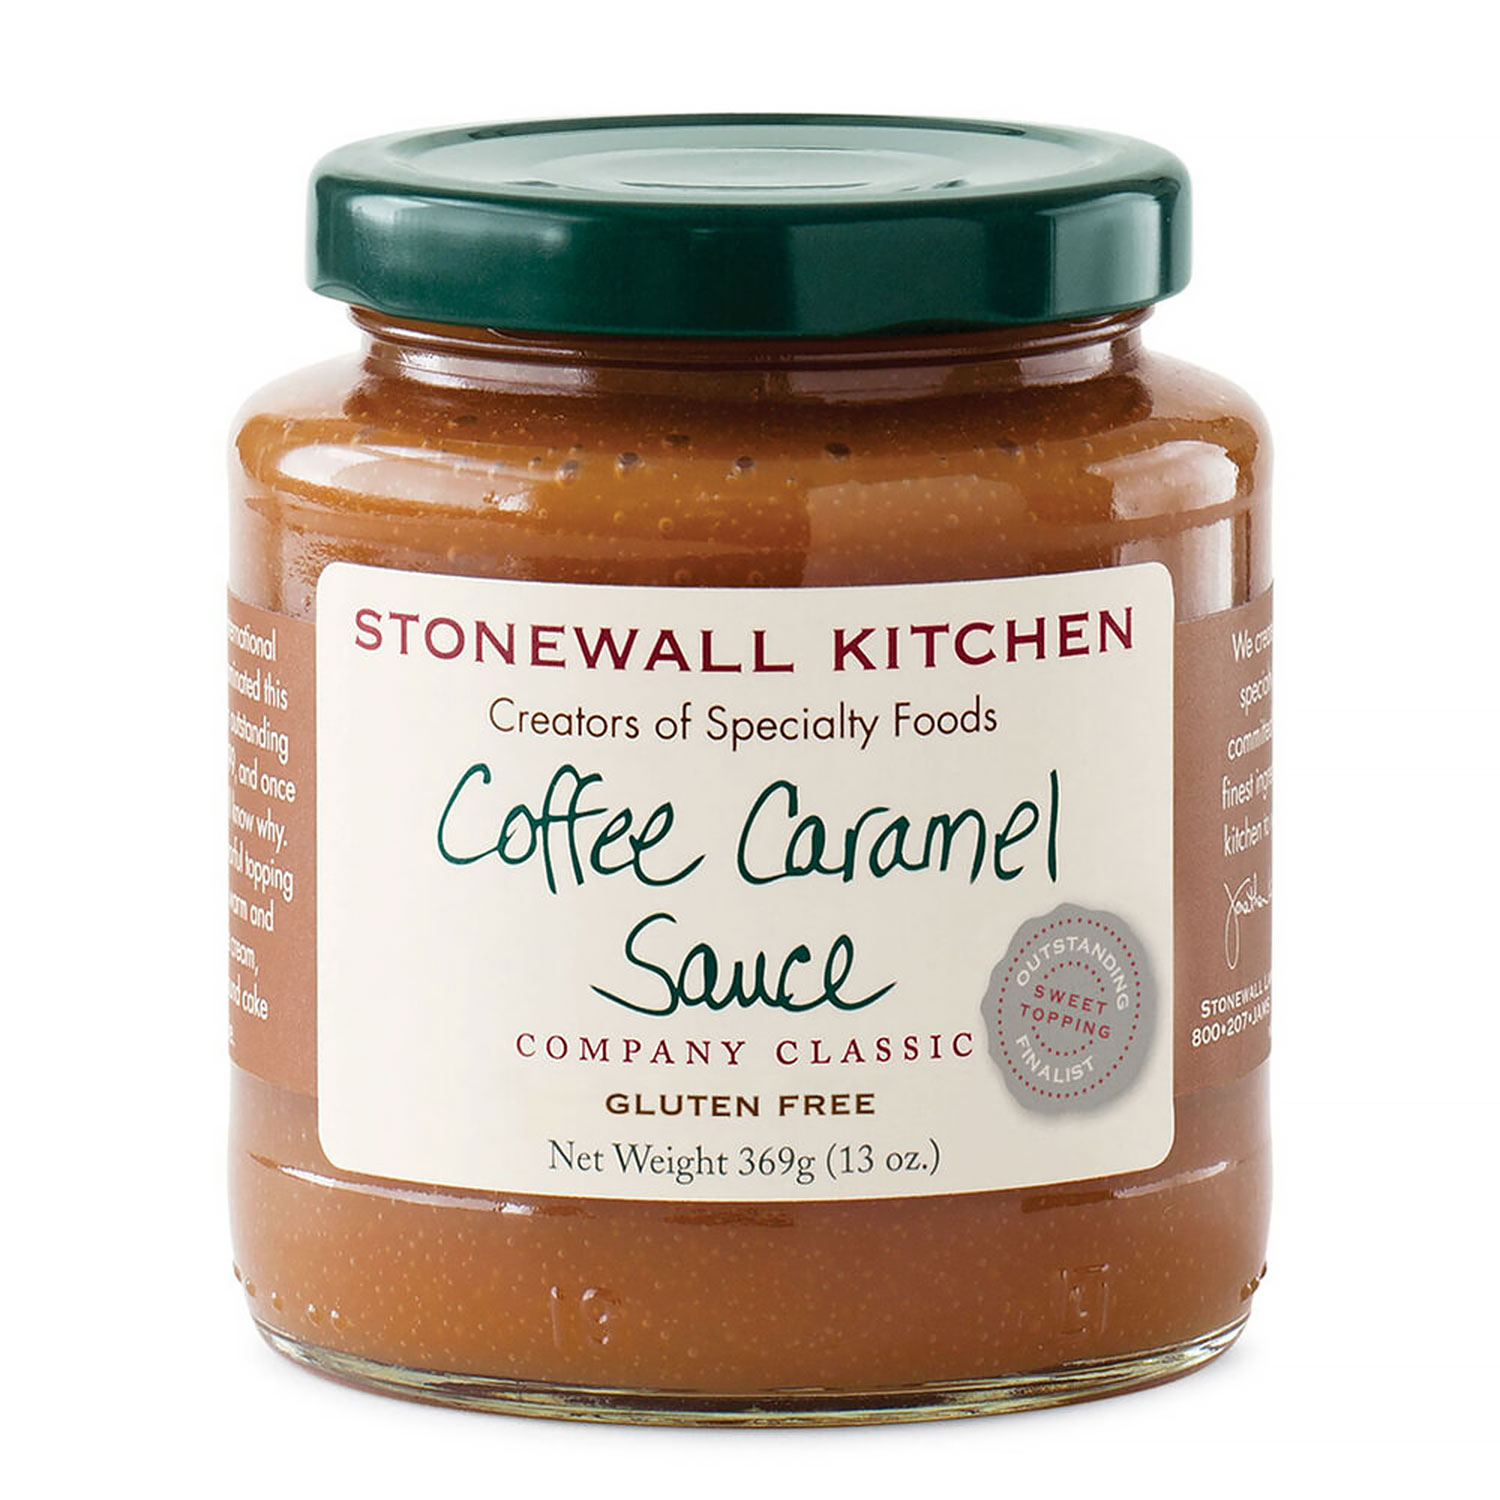 Coffee Caramel Sauce by Stonewall Kitchen